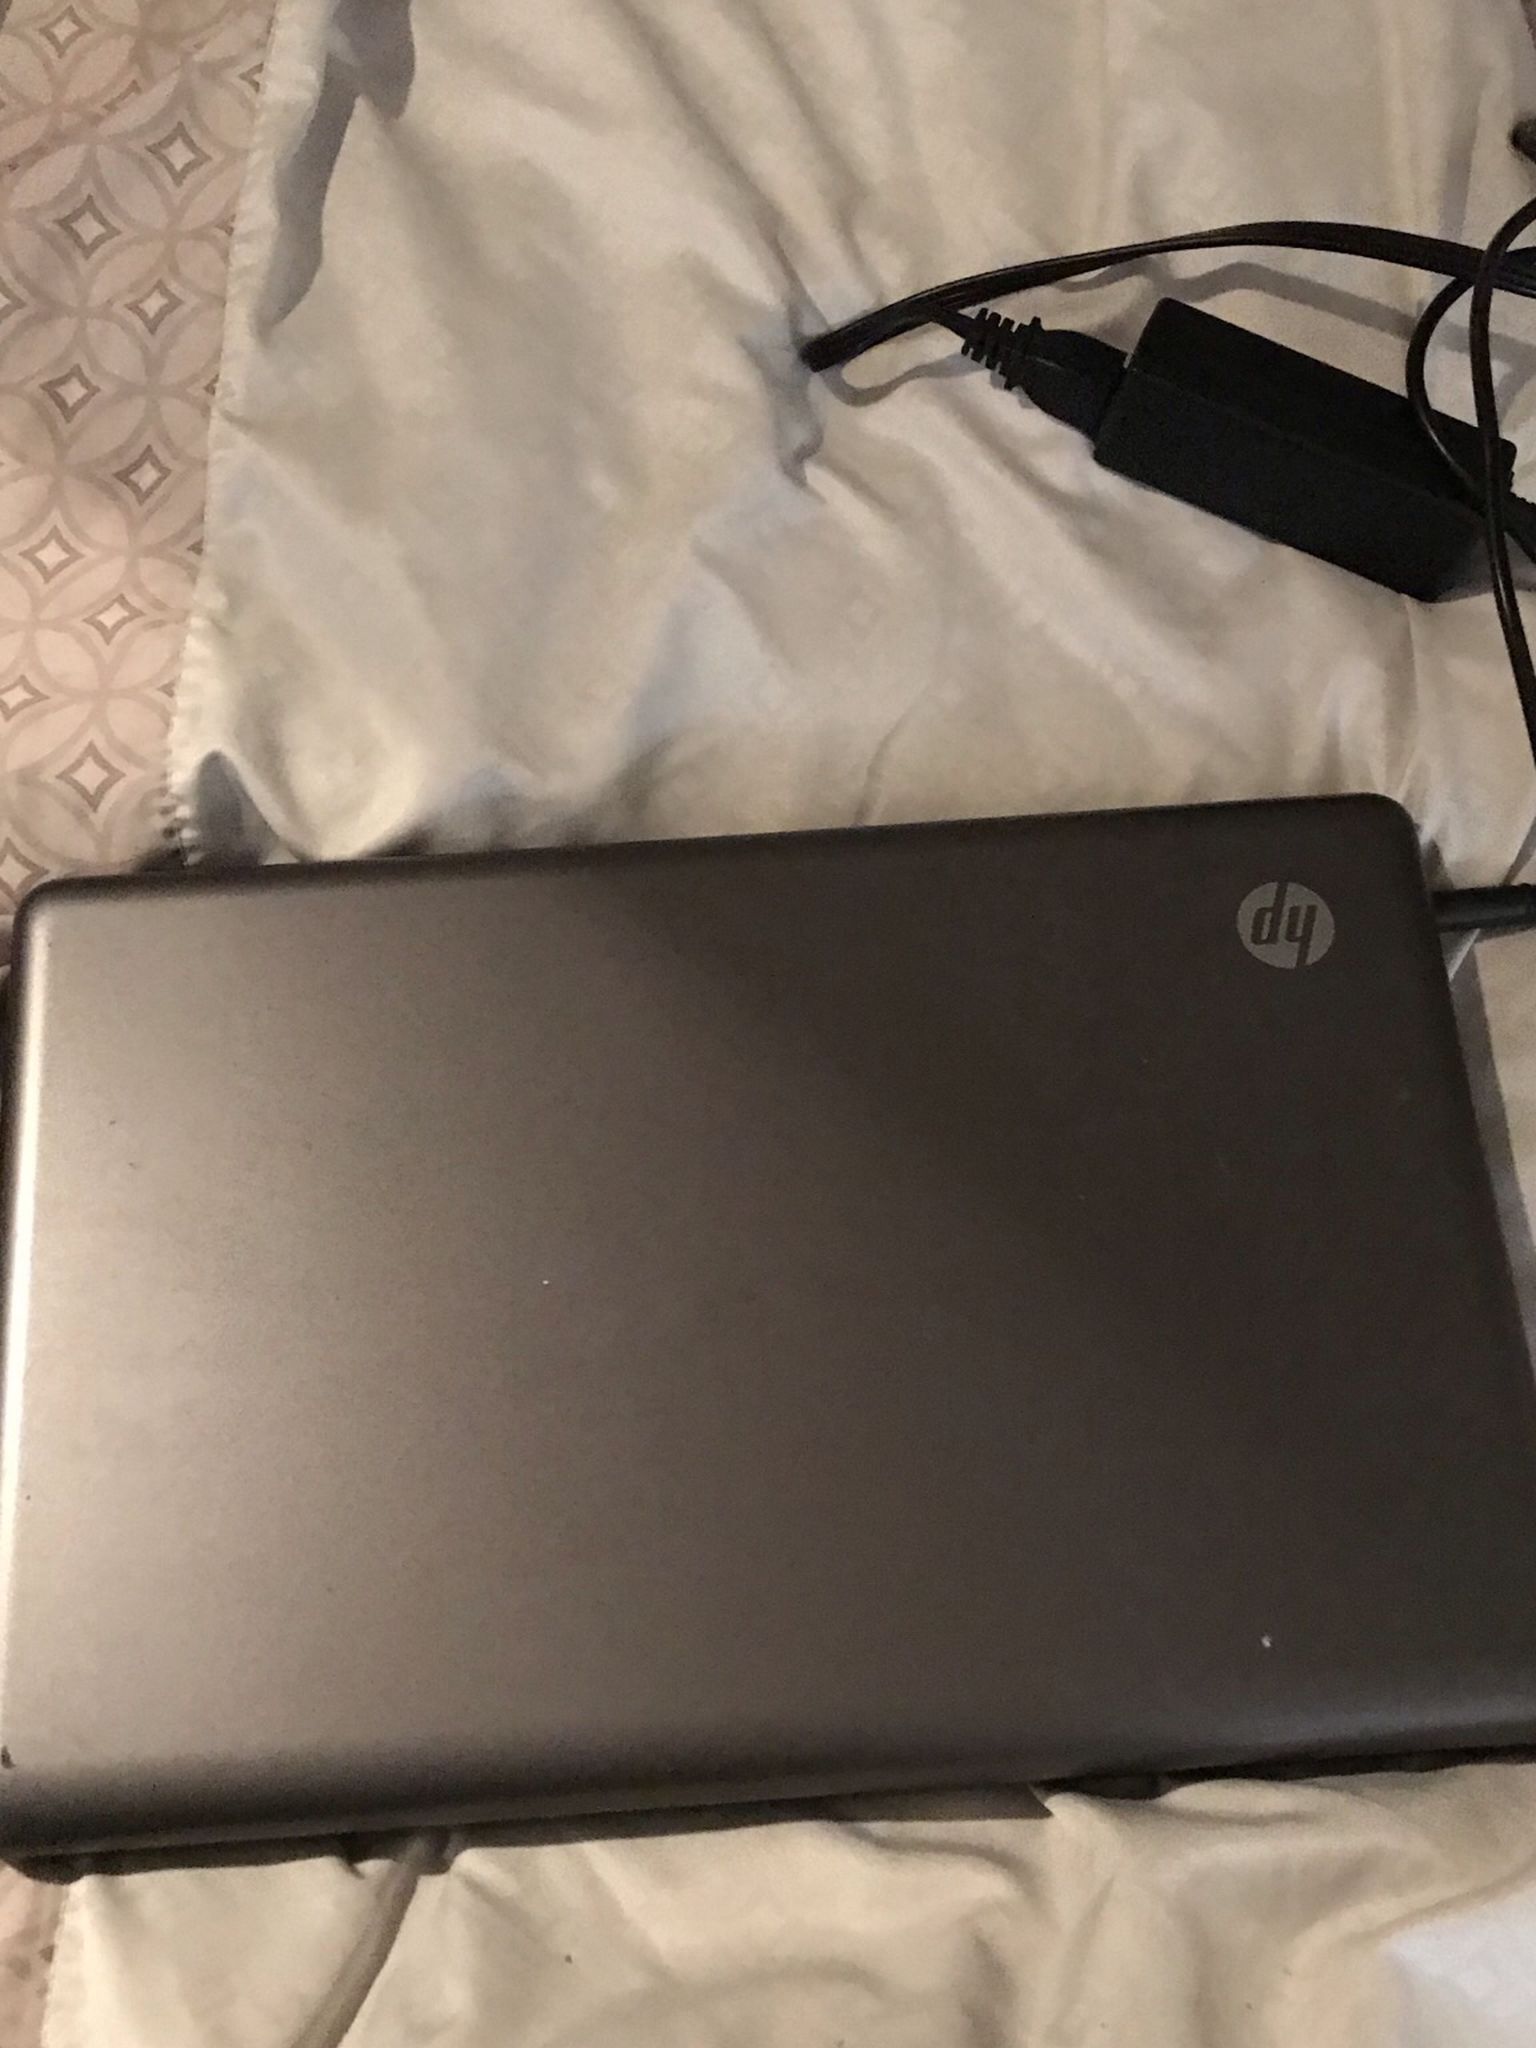 HP Laptop AS-IS !!